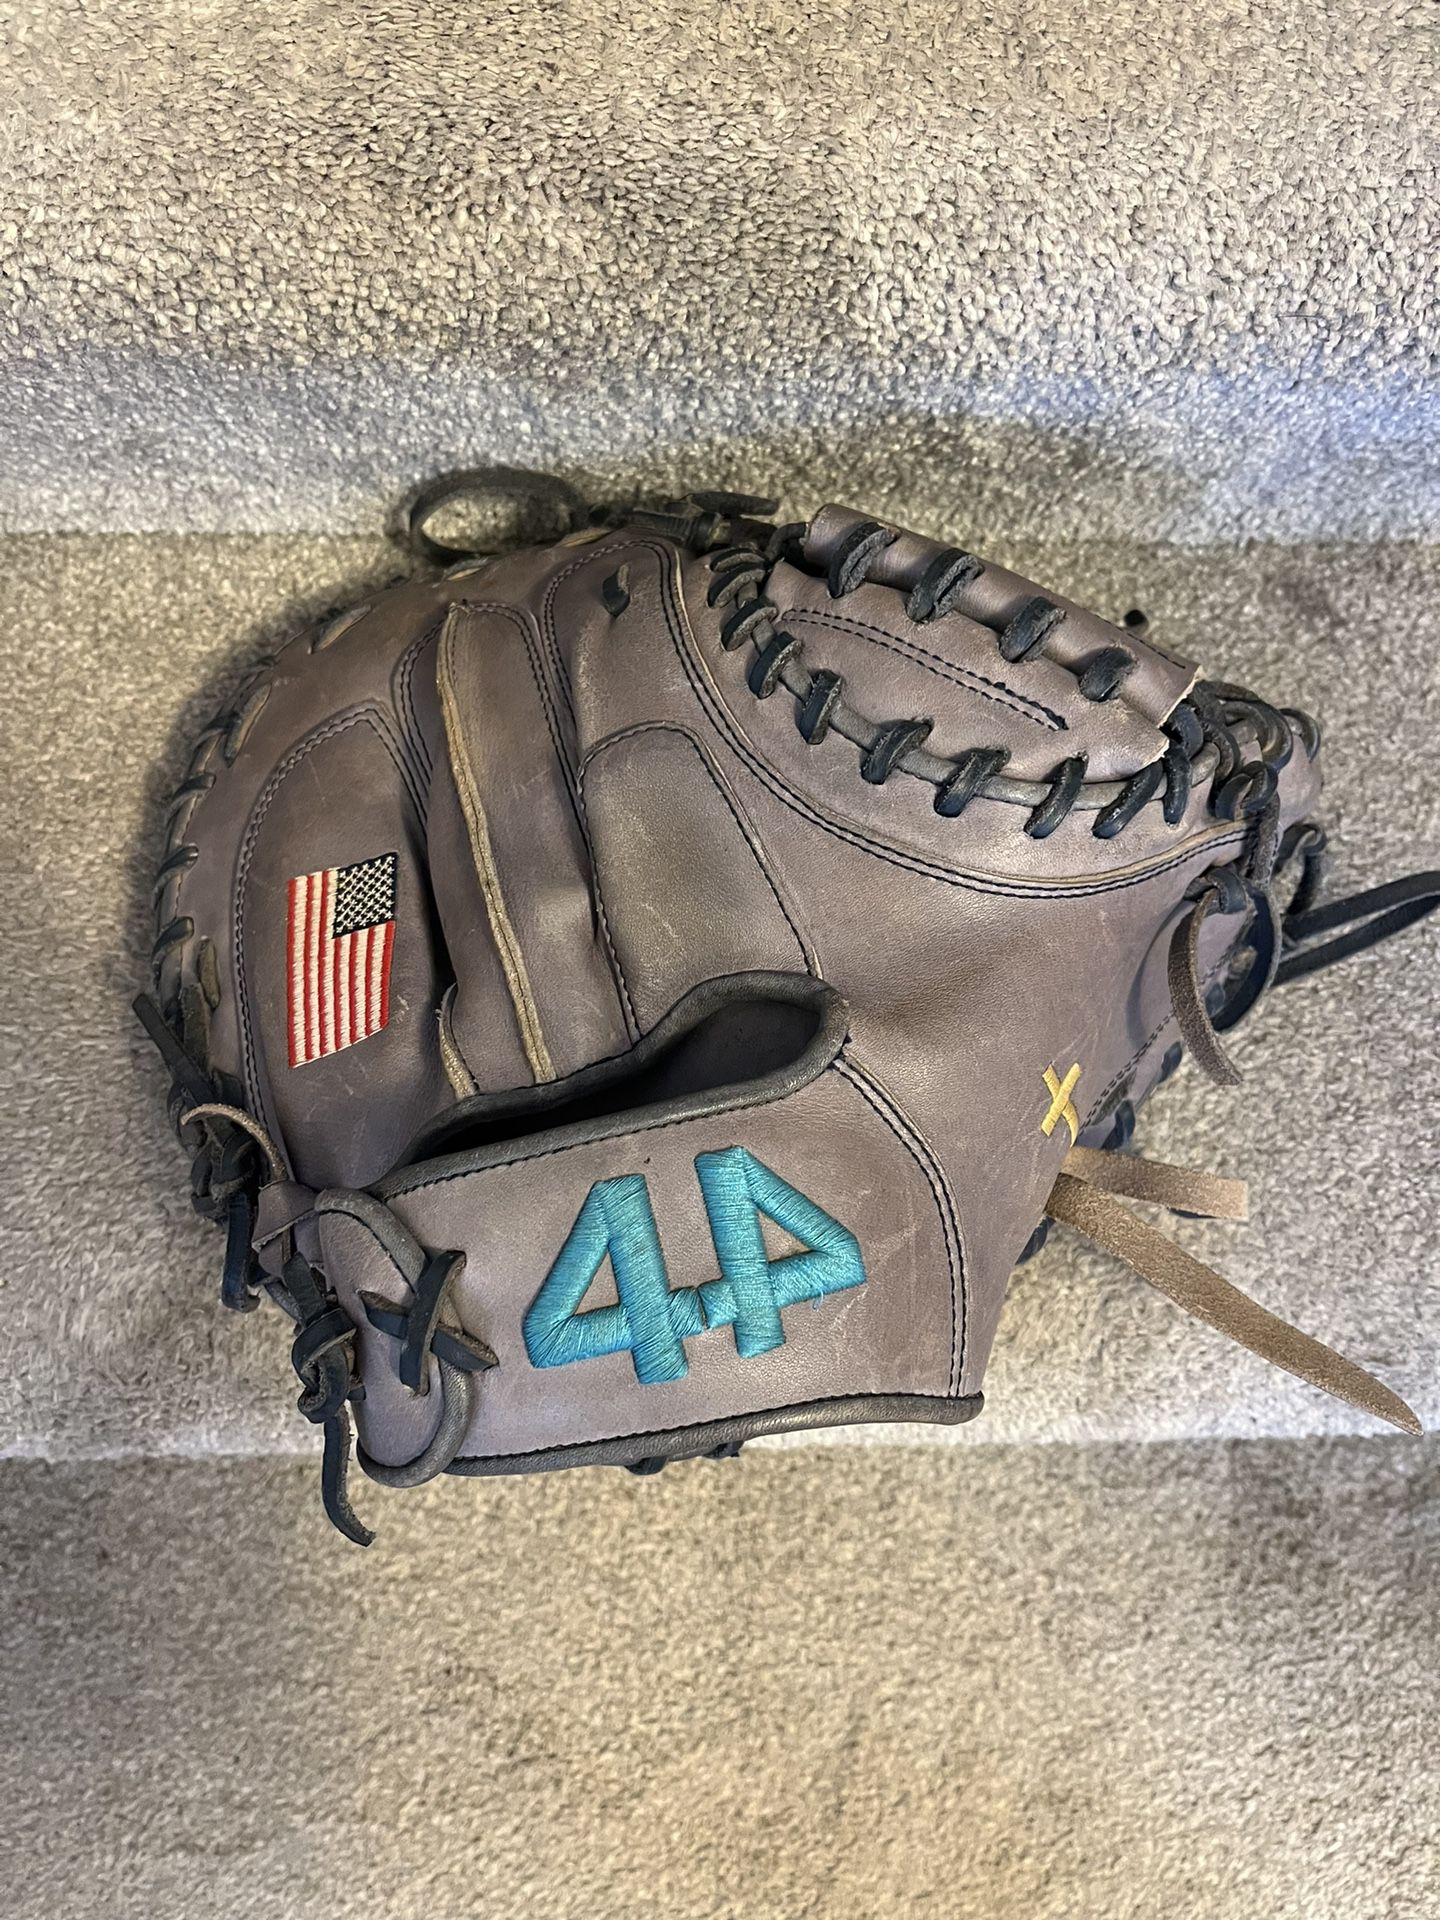 Catchers glove- 44 Brand-34 inch